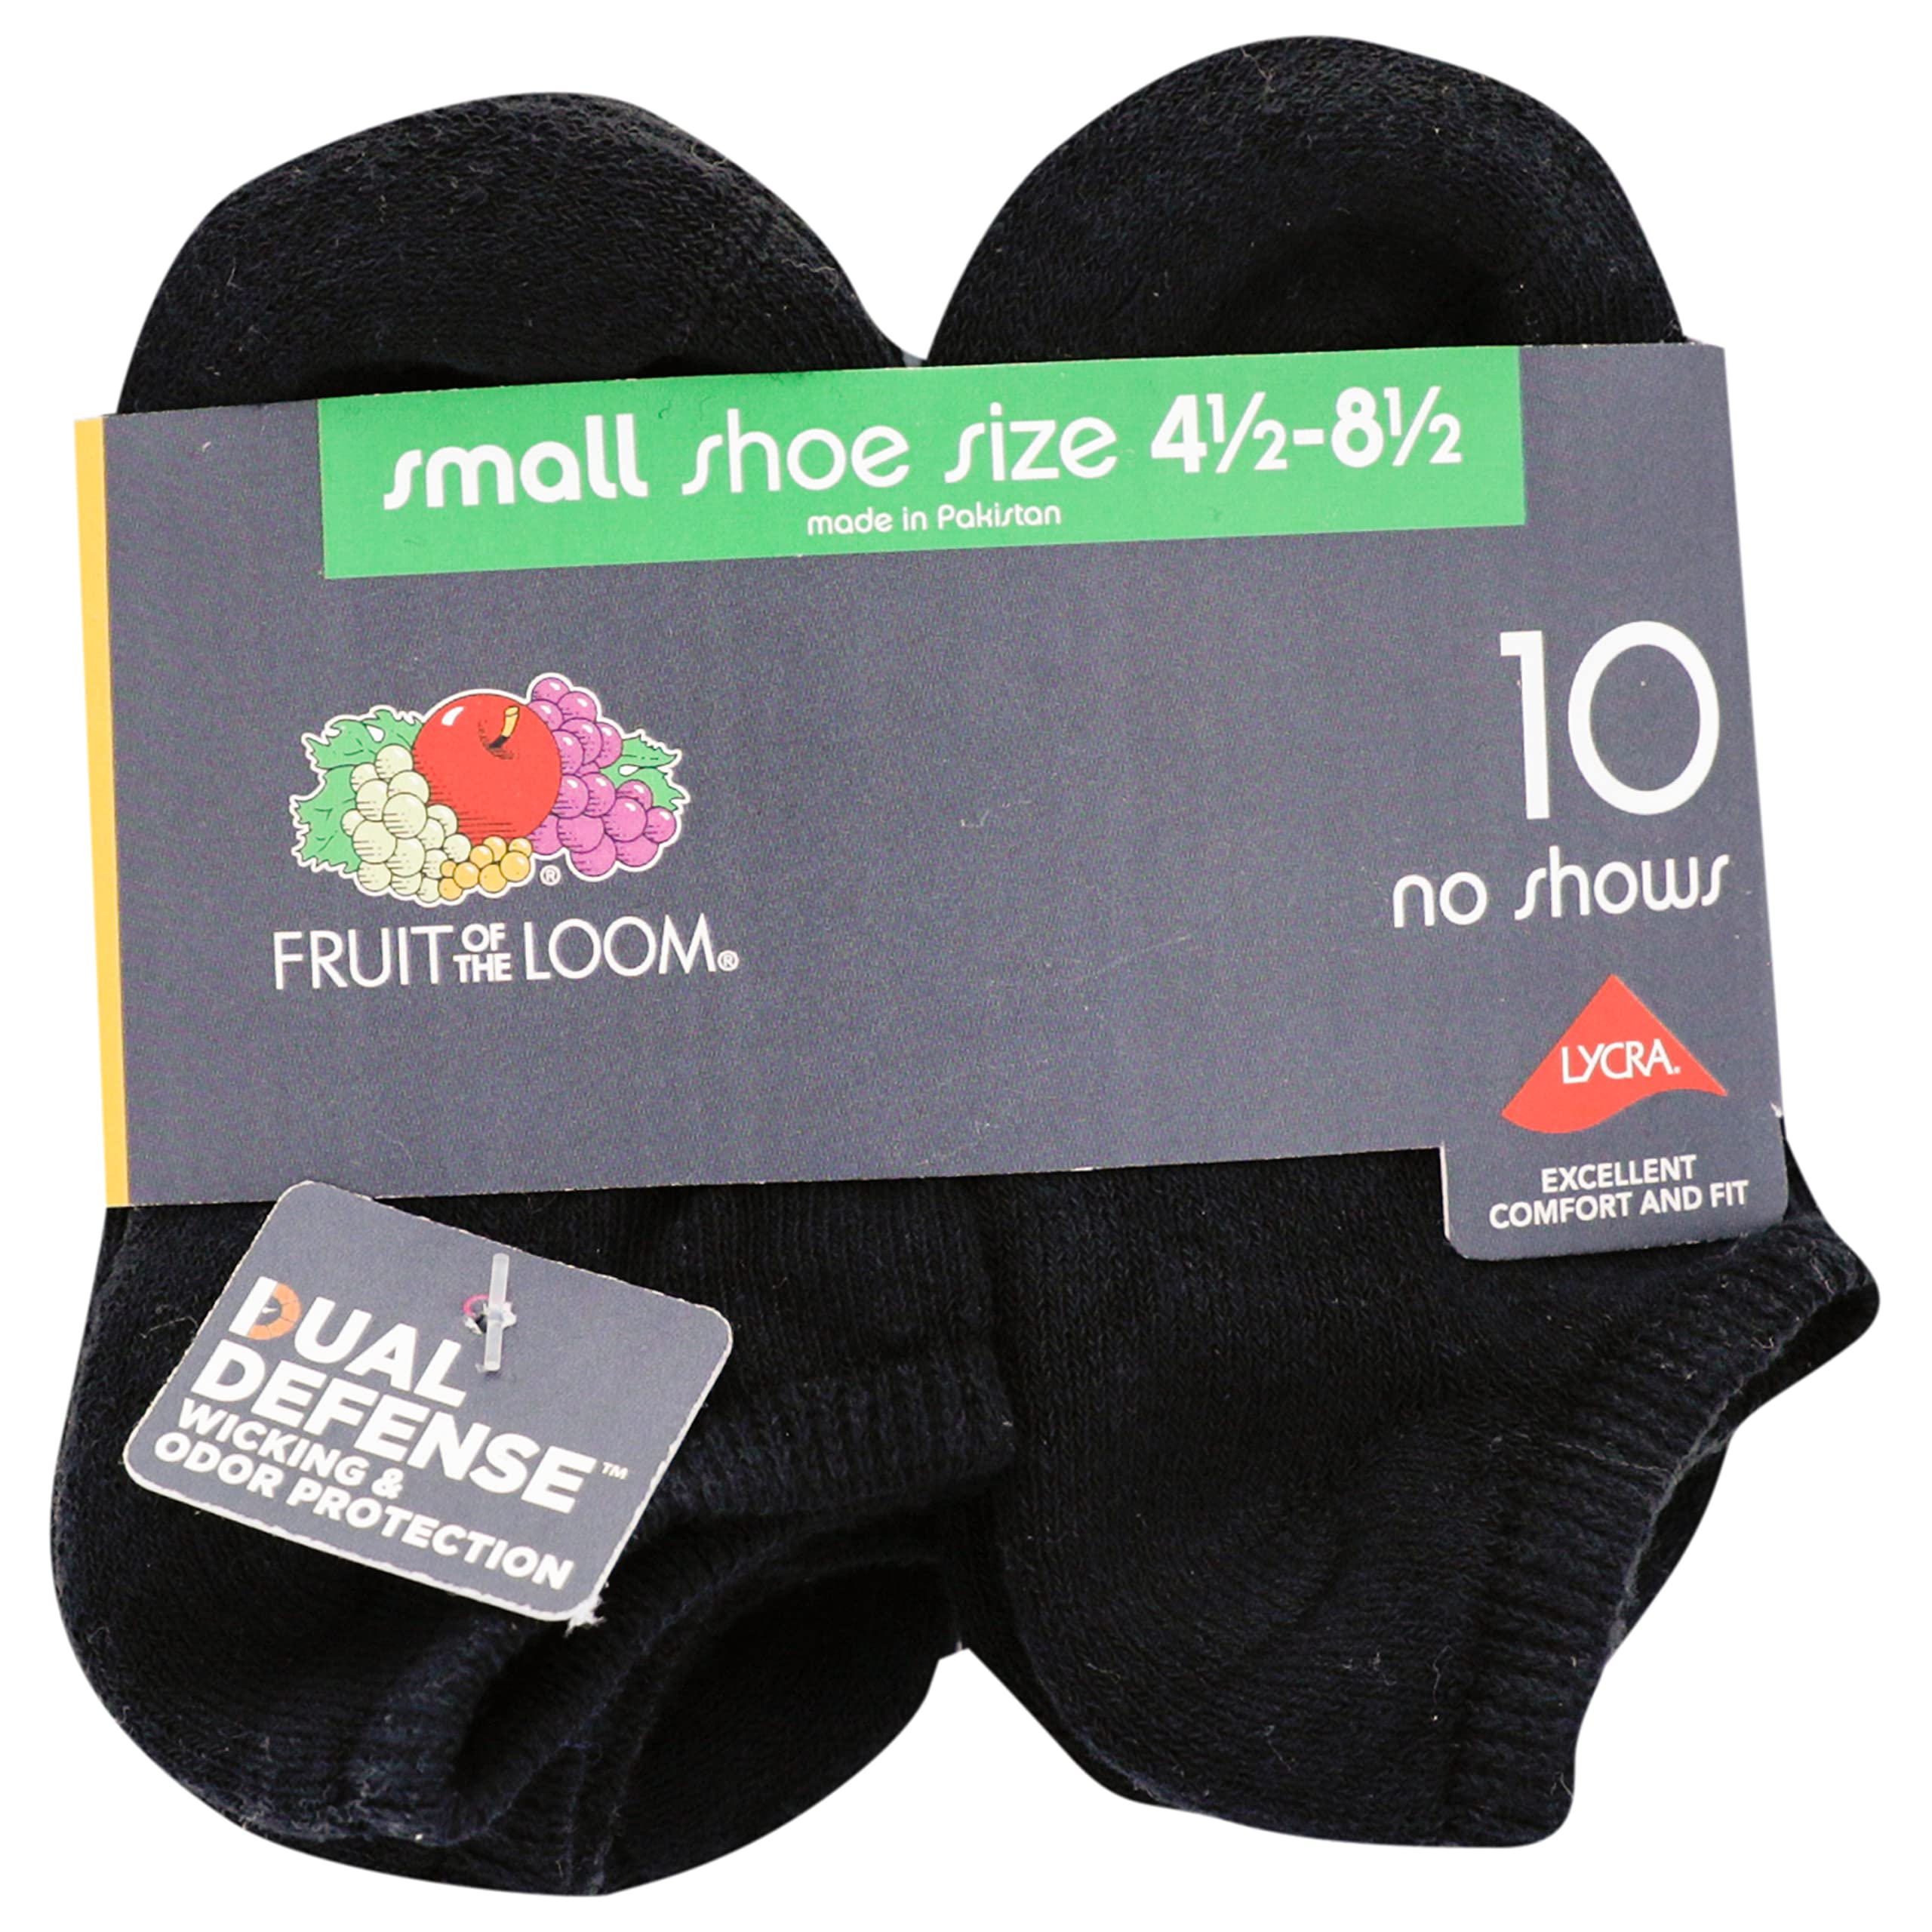 Fruit of the Loom boys 10 Pair Pack Dual Defense Cushioned Comfort Socks